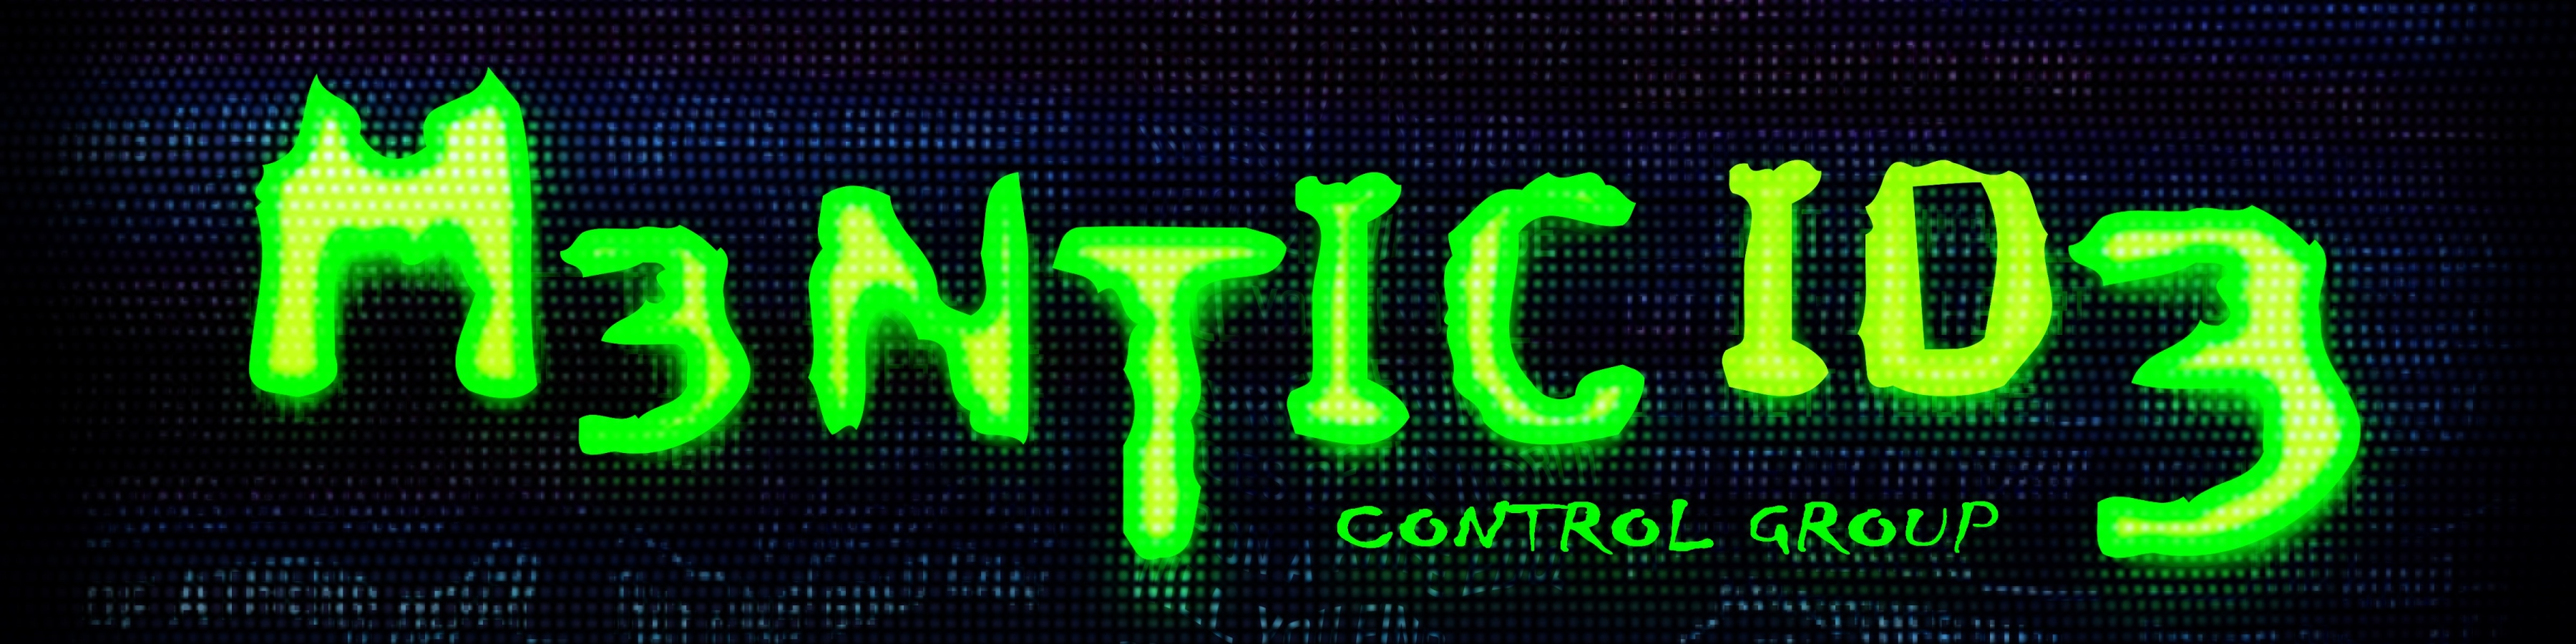 M3NTICID3: Control Group